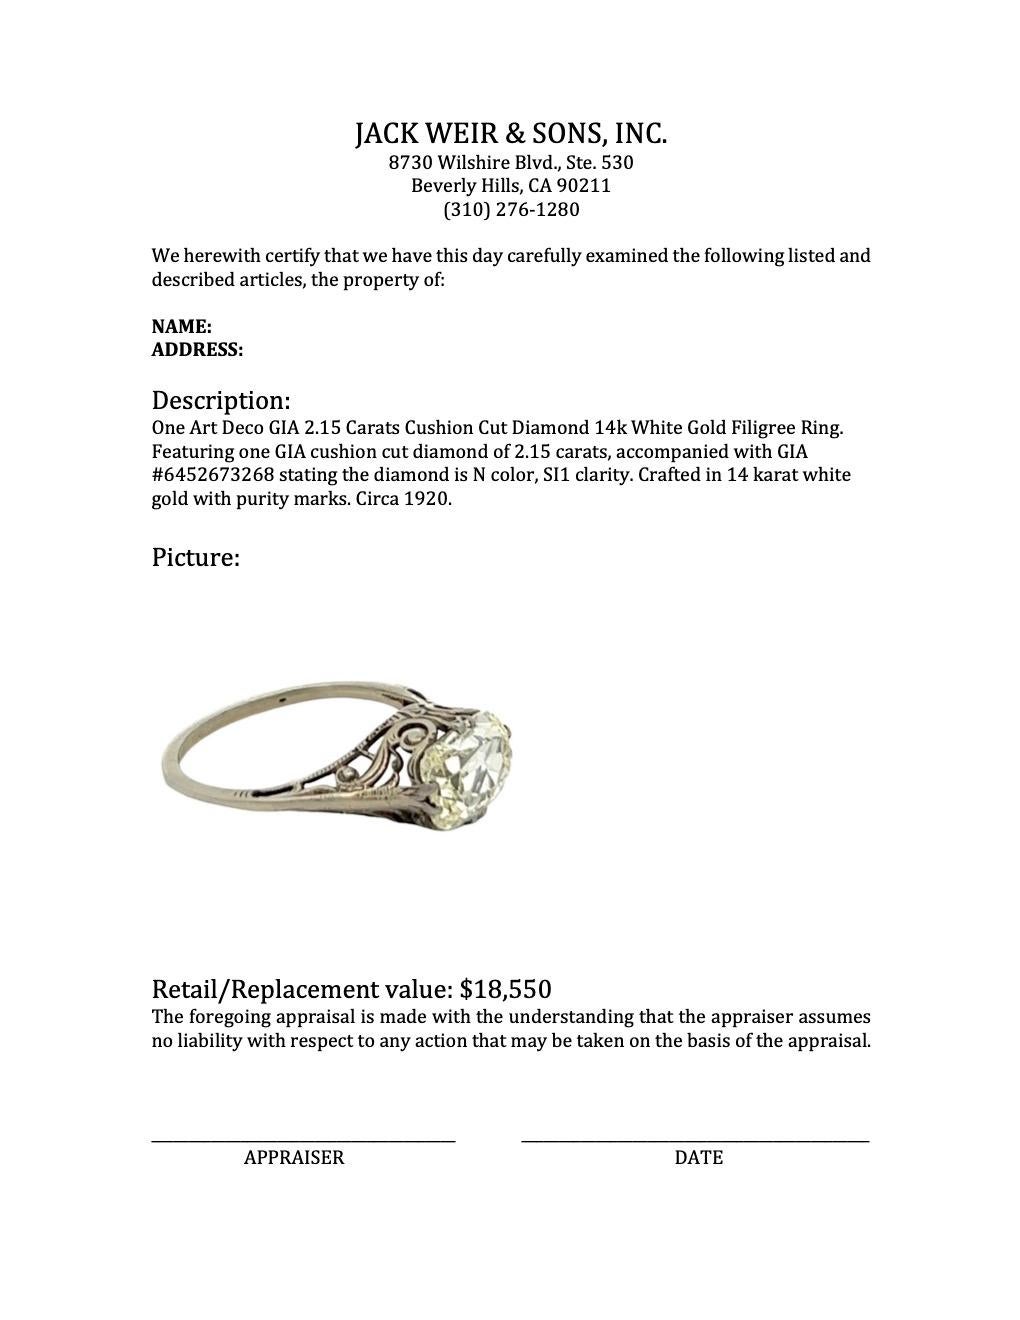 Art Deco GIA 2.15 Carats Cushion Cut Diamond 14k White Gold Filigree Ring 4